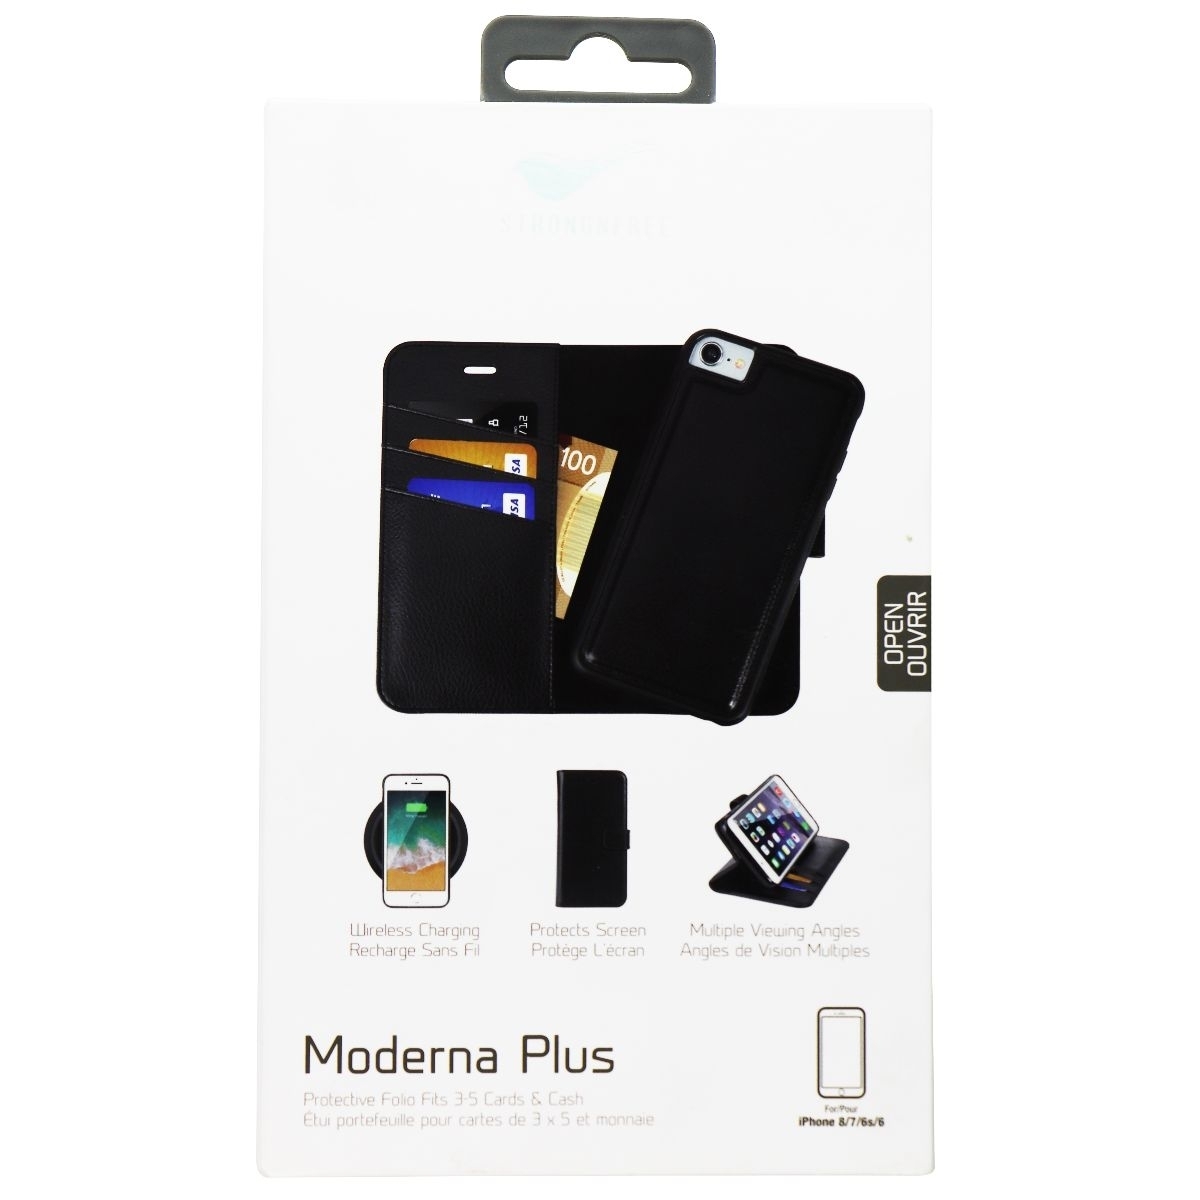 Strongnfree Moderna Plus Folio Wallet Case For Apple IPhone 8/7/6s/6 - Black (Refurbished)